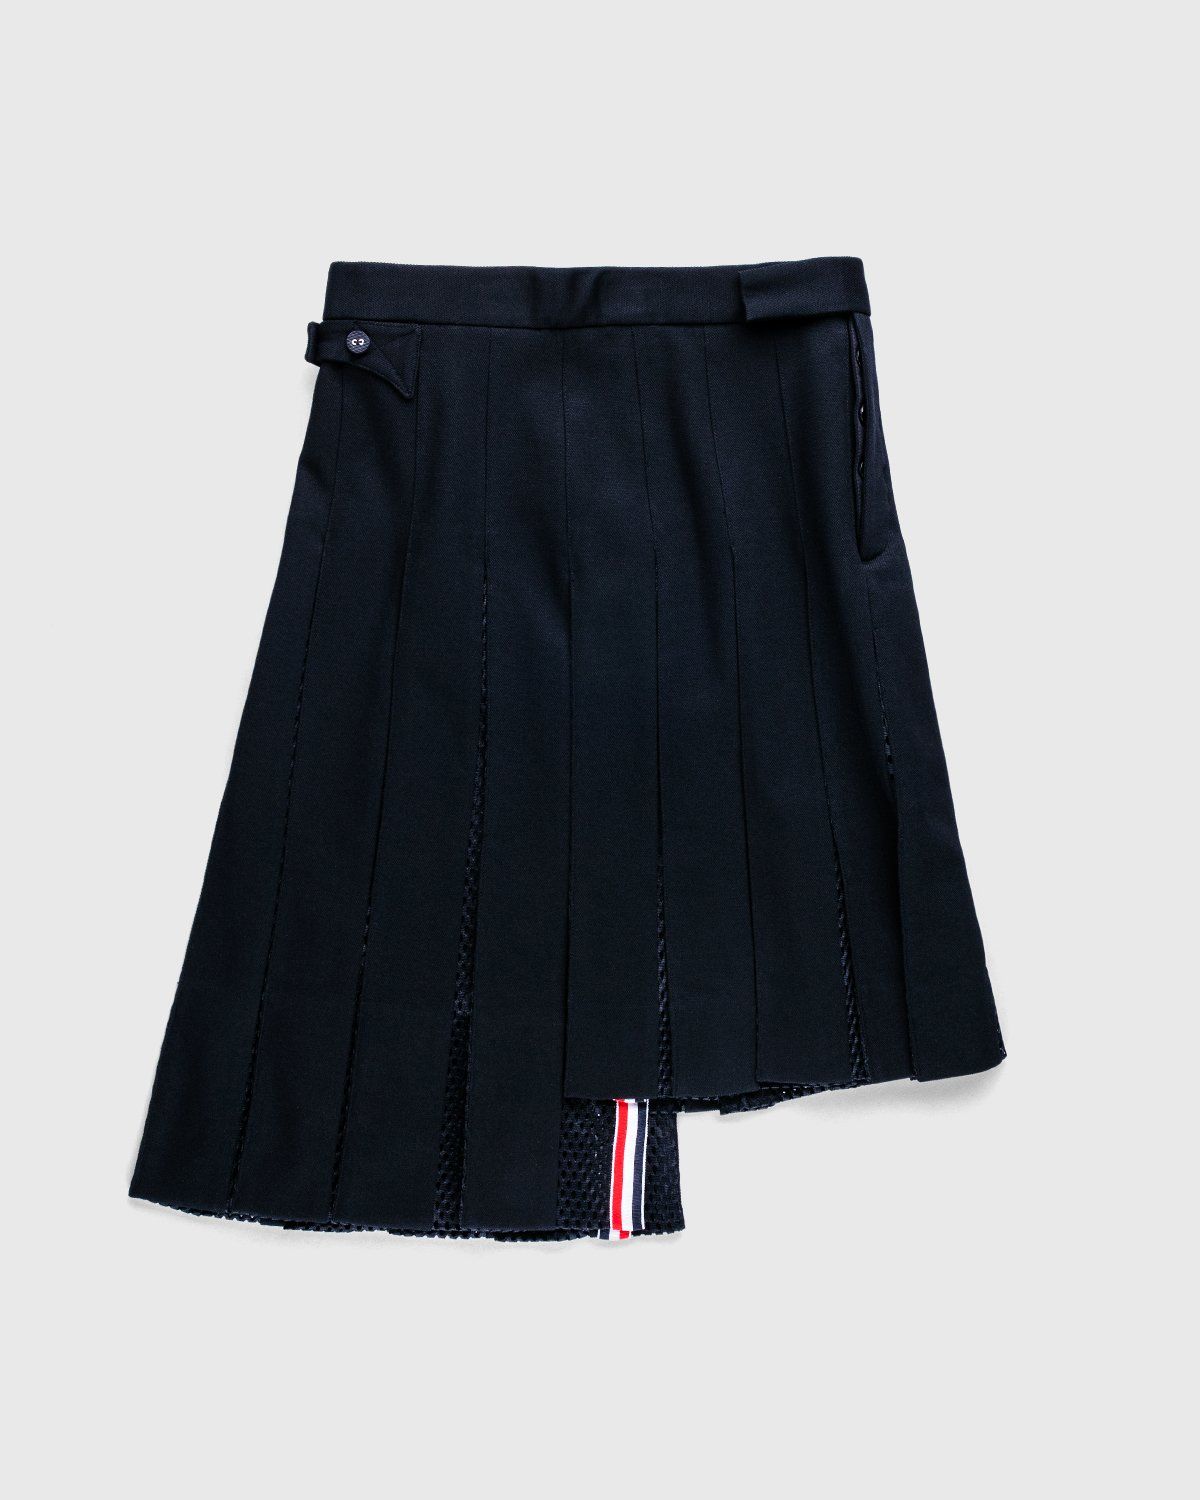 Thom Browne x Highsnobiety – Women’s Pleated Mesh Skirt Black - Suits - Black - Image 3